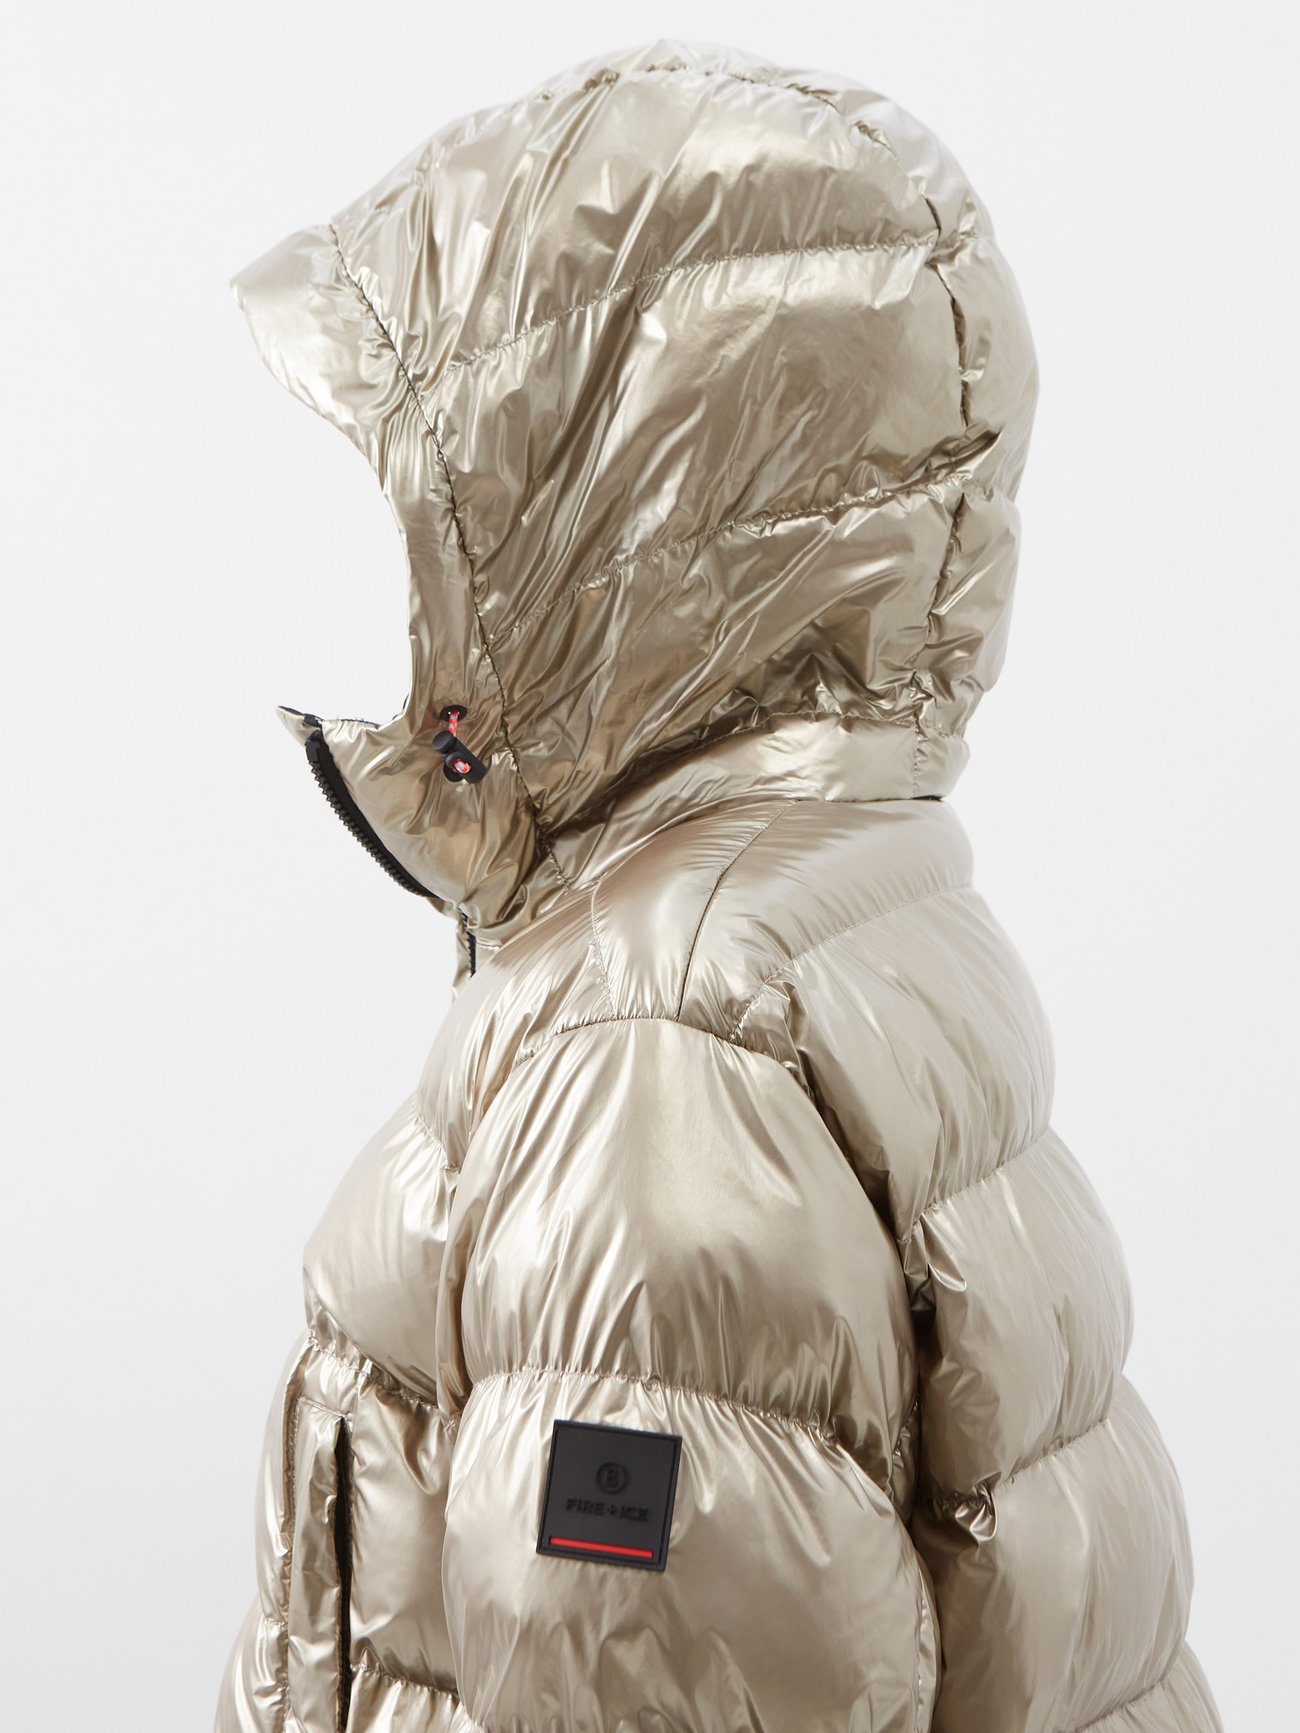 Gold Raissa2 hooded quilted ski jacket, Bogner Fire + Ice